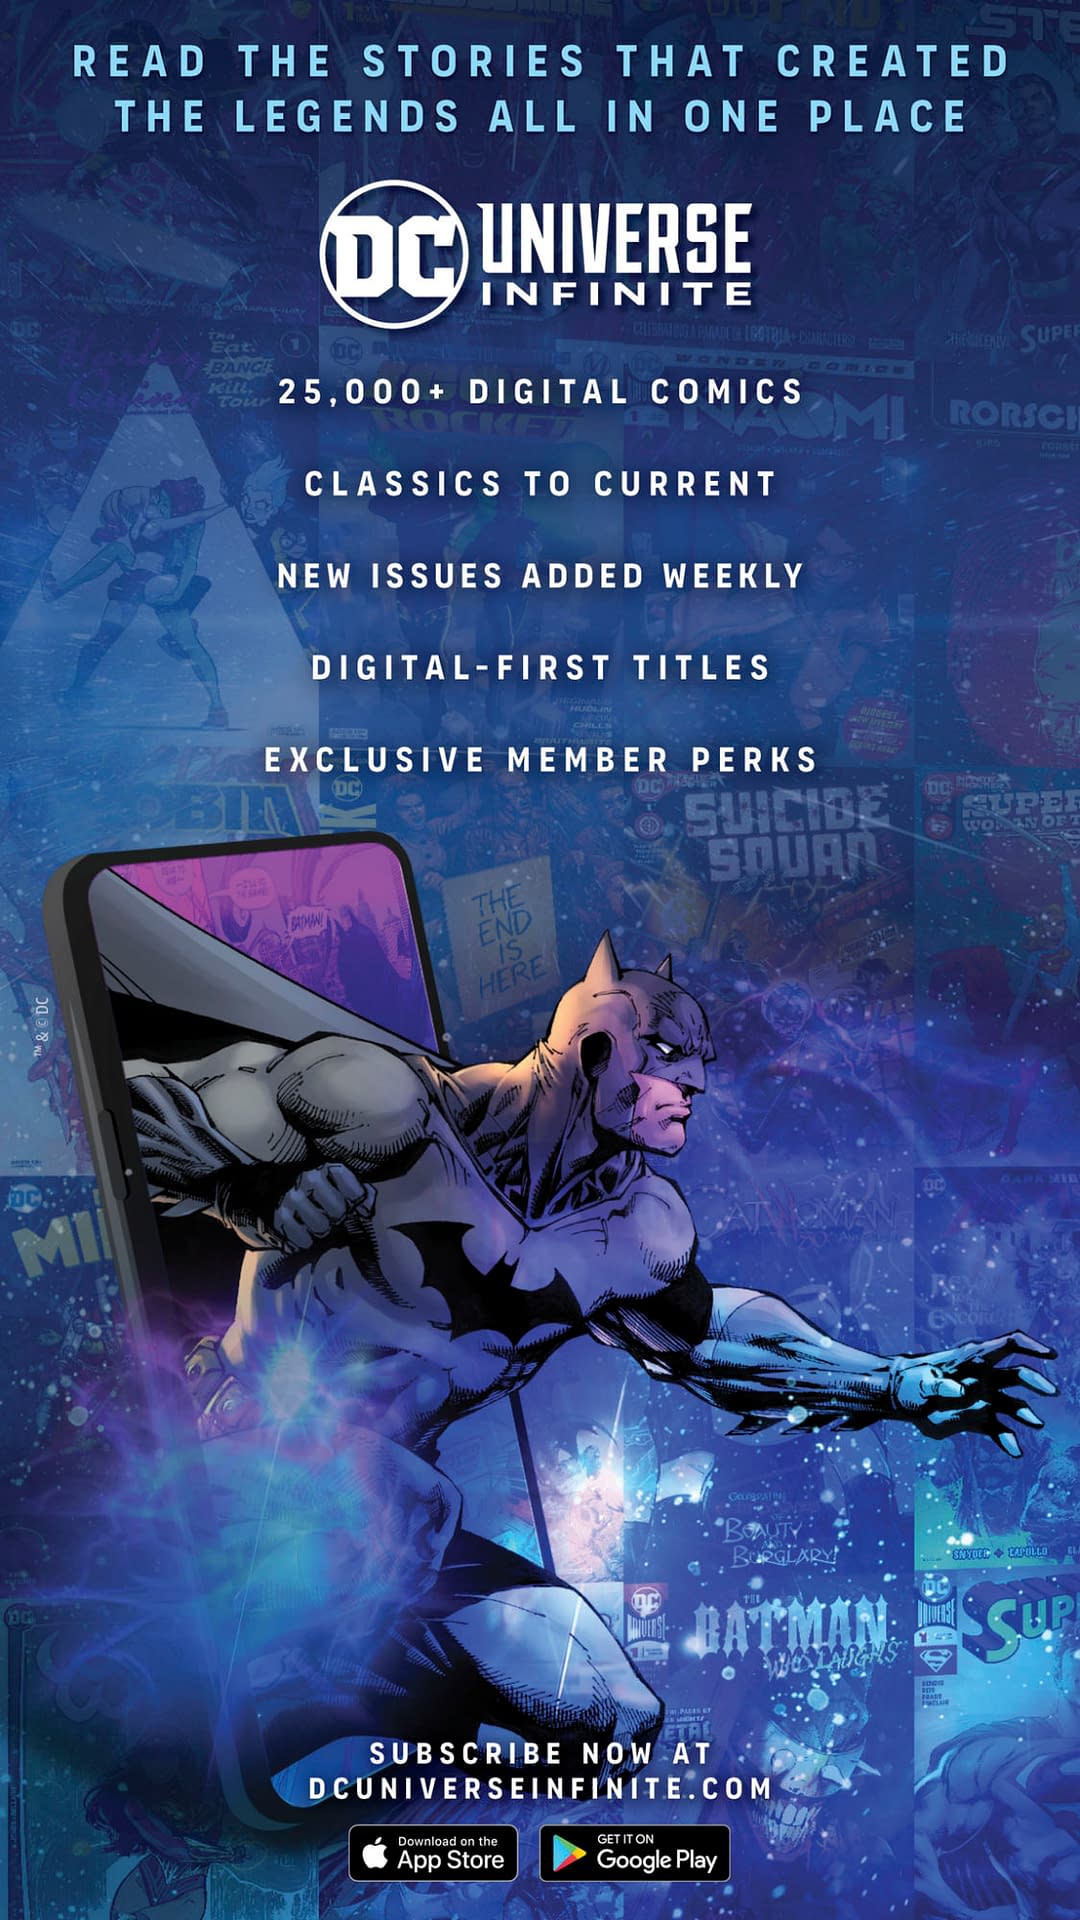 DC AND HBO MAX ANNOUNCE NEW ORIGINAL DIGITAL COMIC SERIES